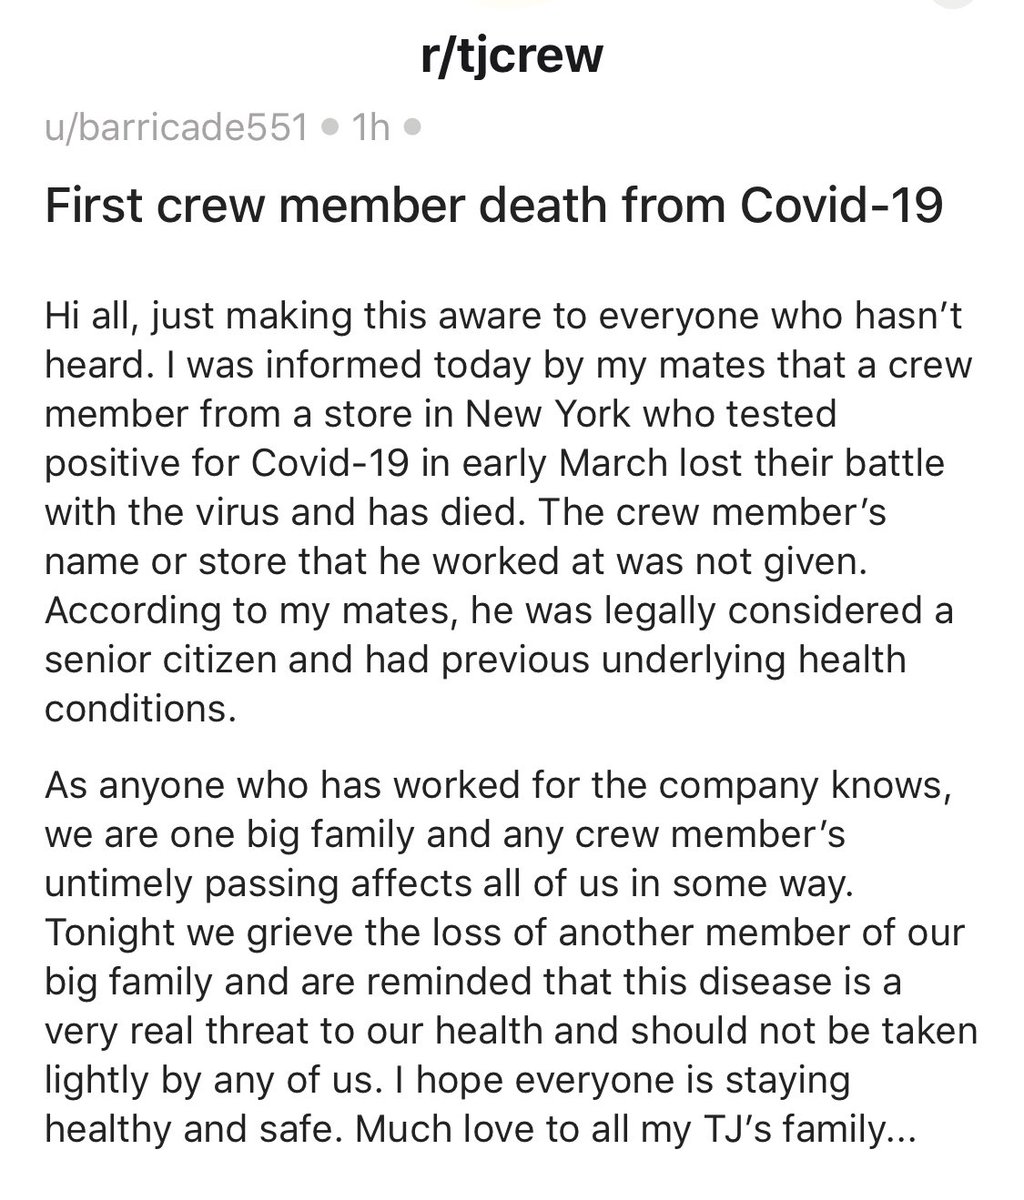 Fuck.  https://www.reddit.com/r/tjcrew/comments/fvrnpq/first_crew_member_death_from_covid19/